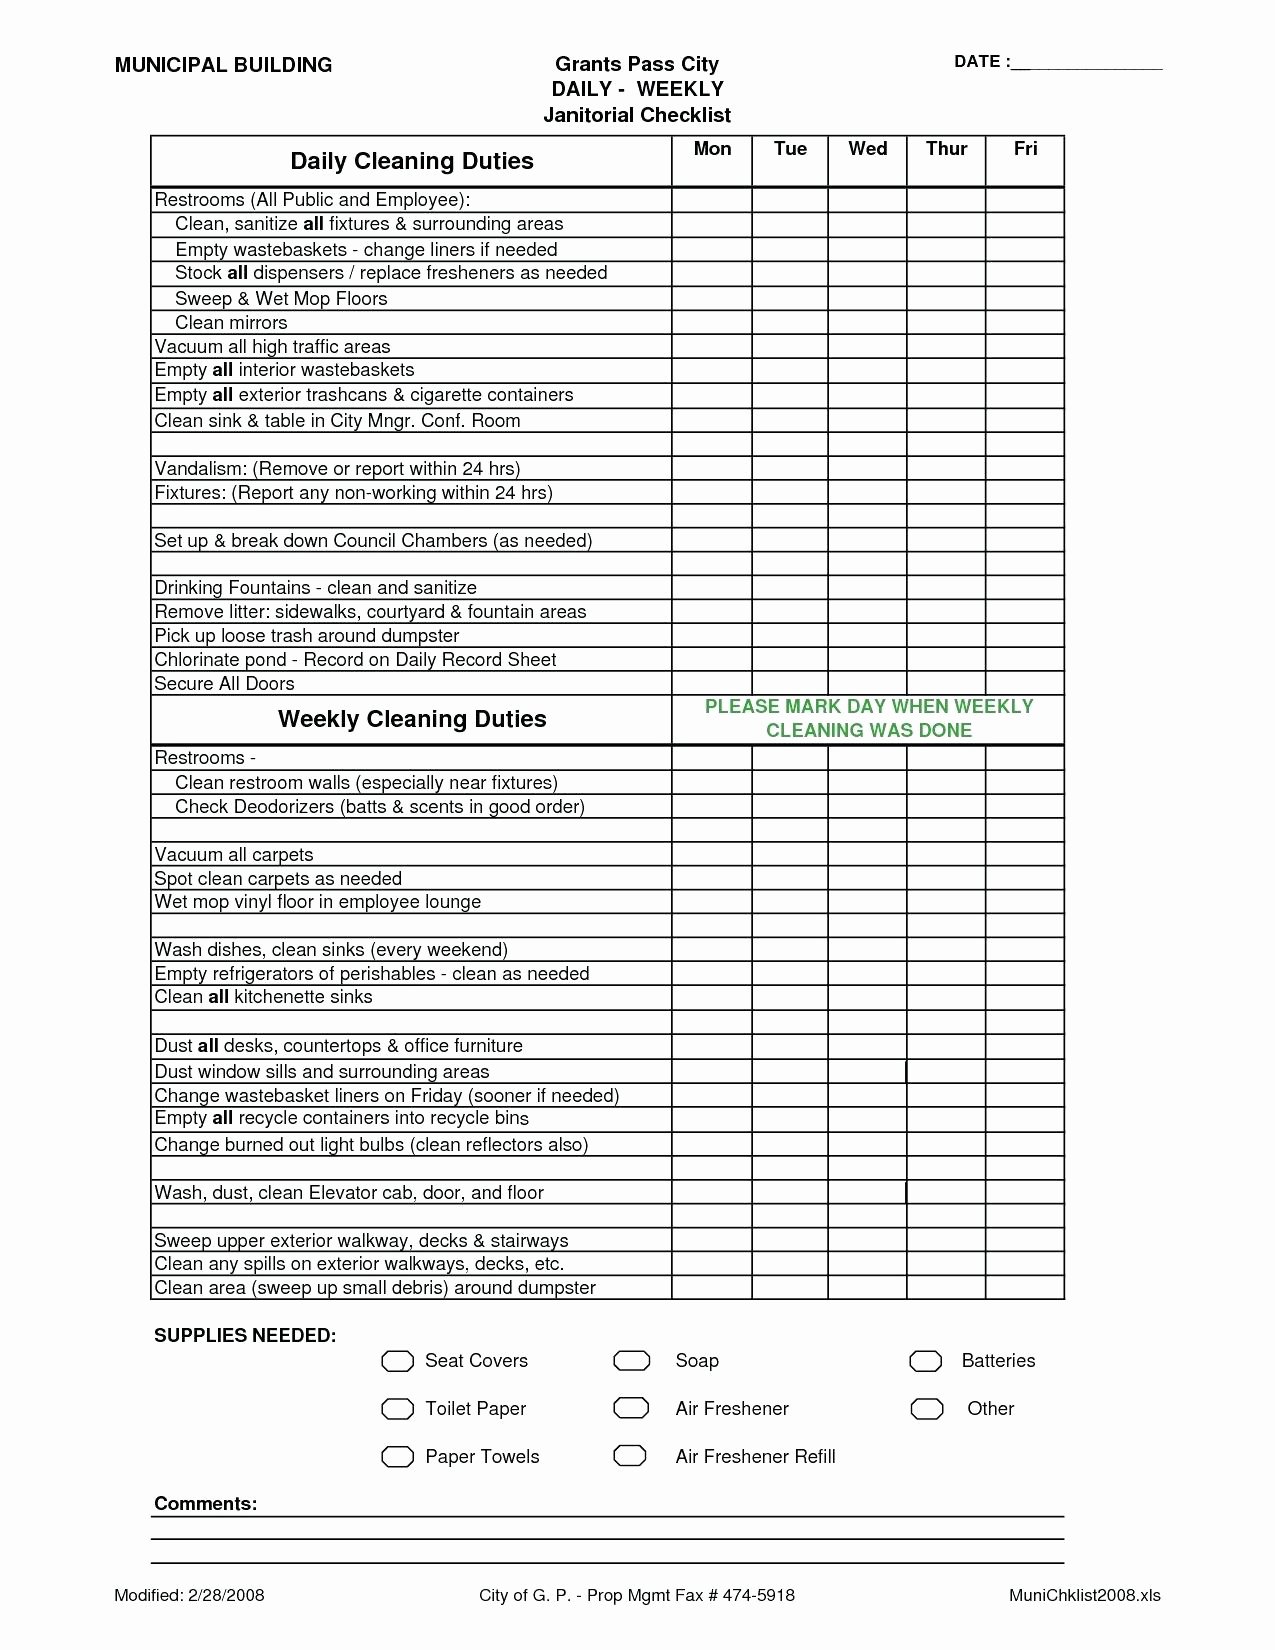 Preschool Cleaning Checklist Template Fresh Daycare Cleaning Checklist Template